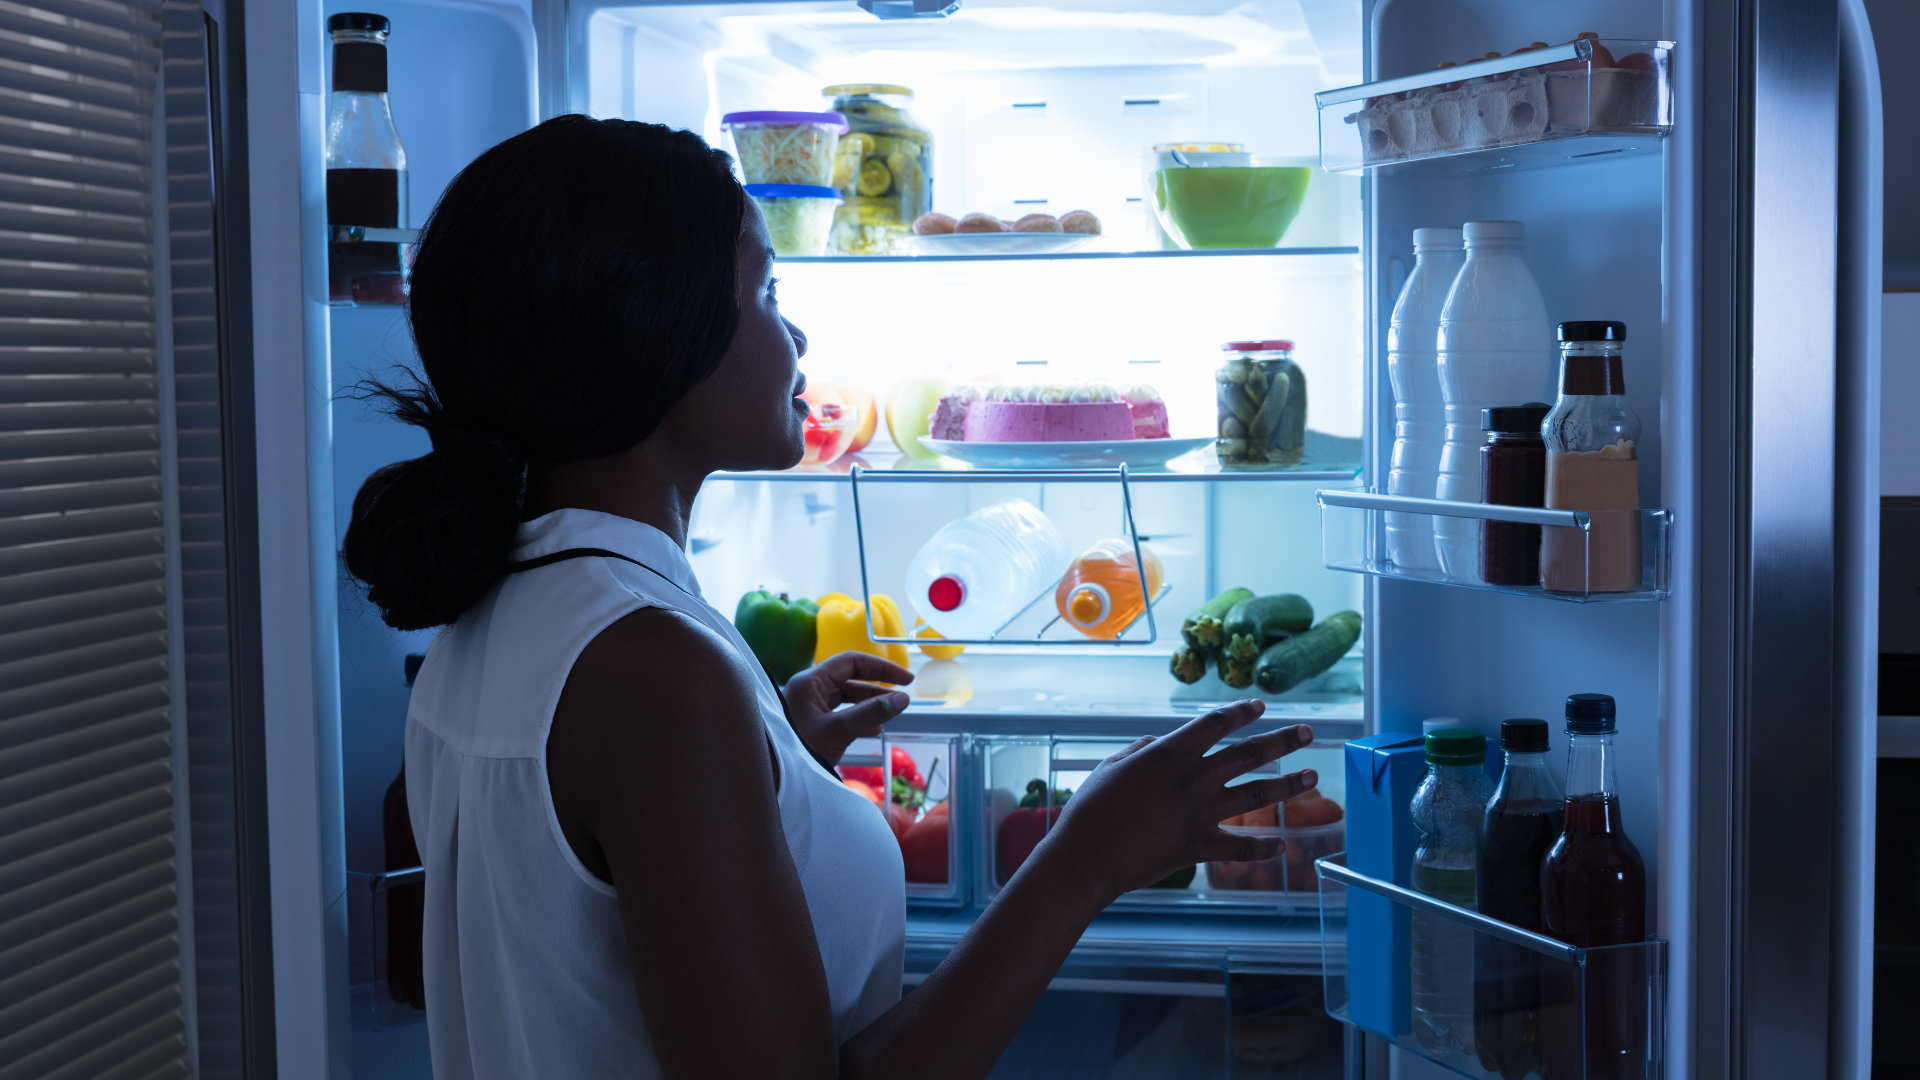 How To Fix The Error Code OP For GE Refrigerator & Freezer